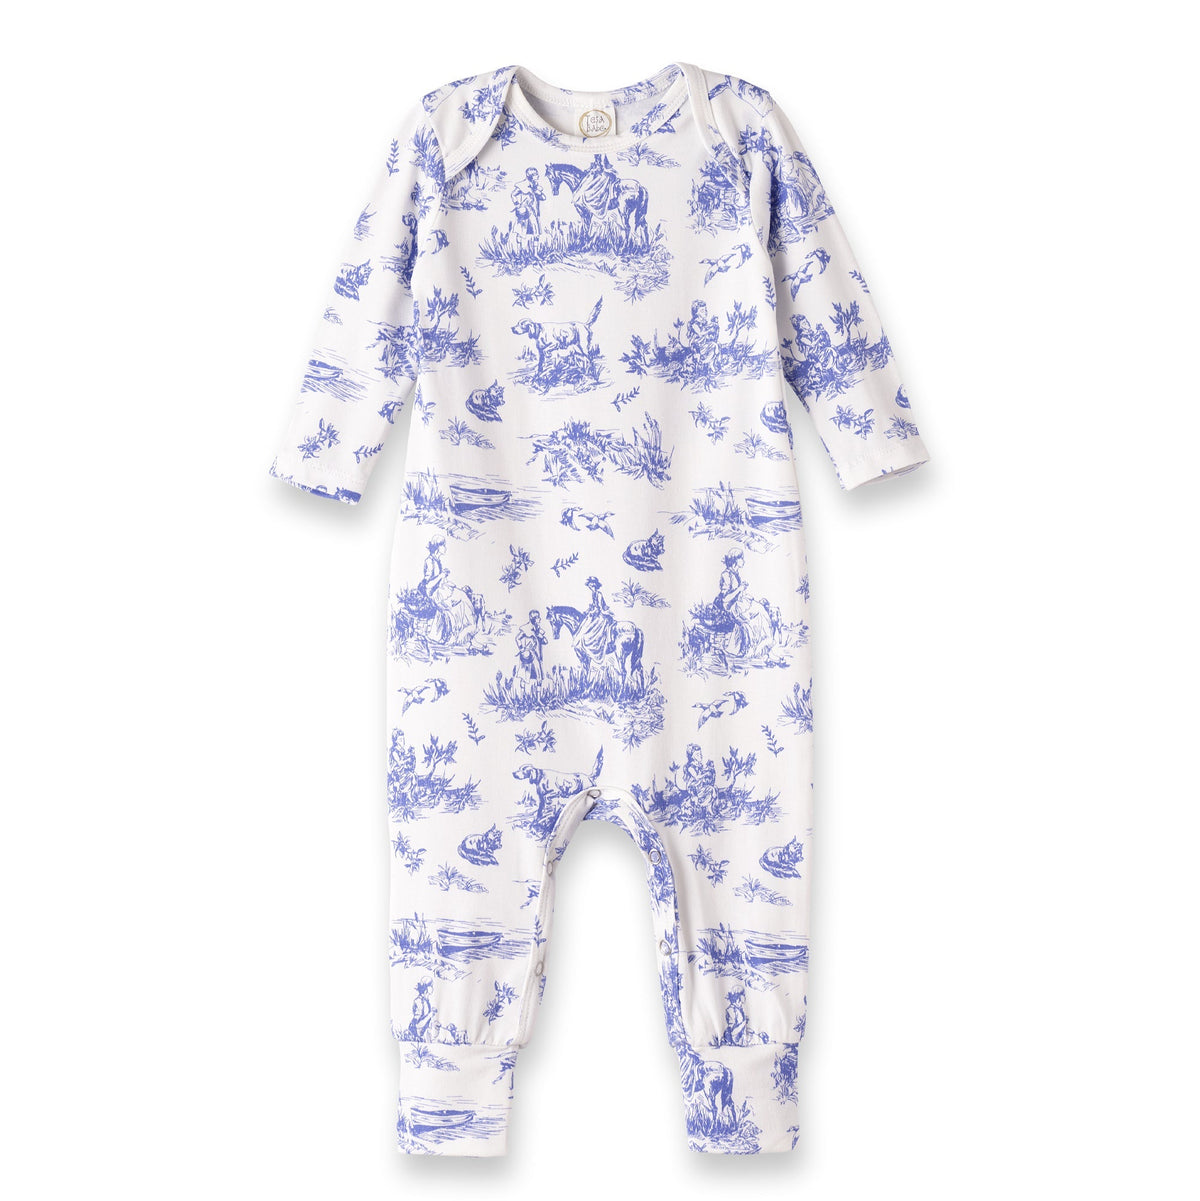 Tesa Babe Baby Girl Clothes Romper / Newborn Toile de Jouy Bamboo Romper